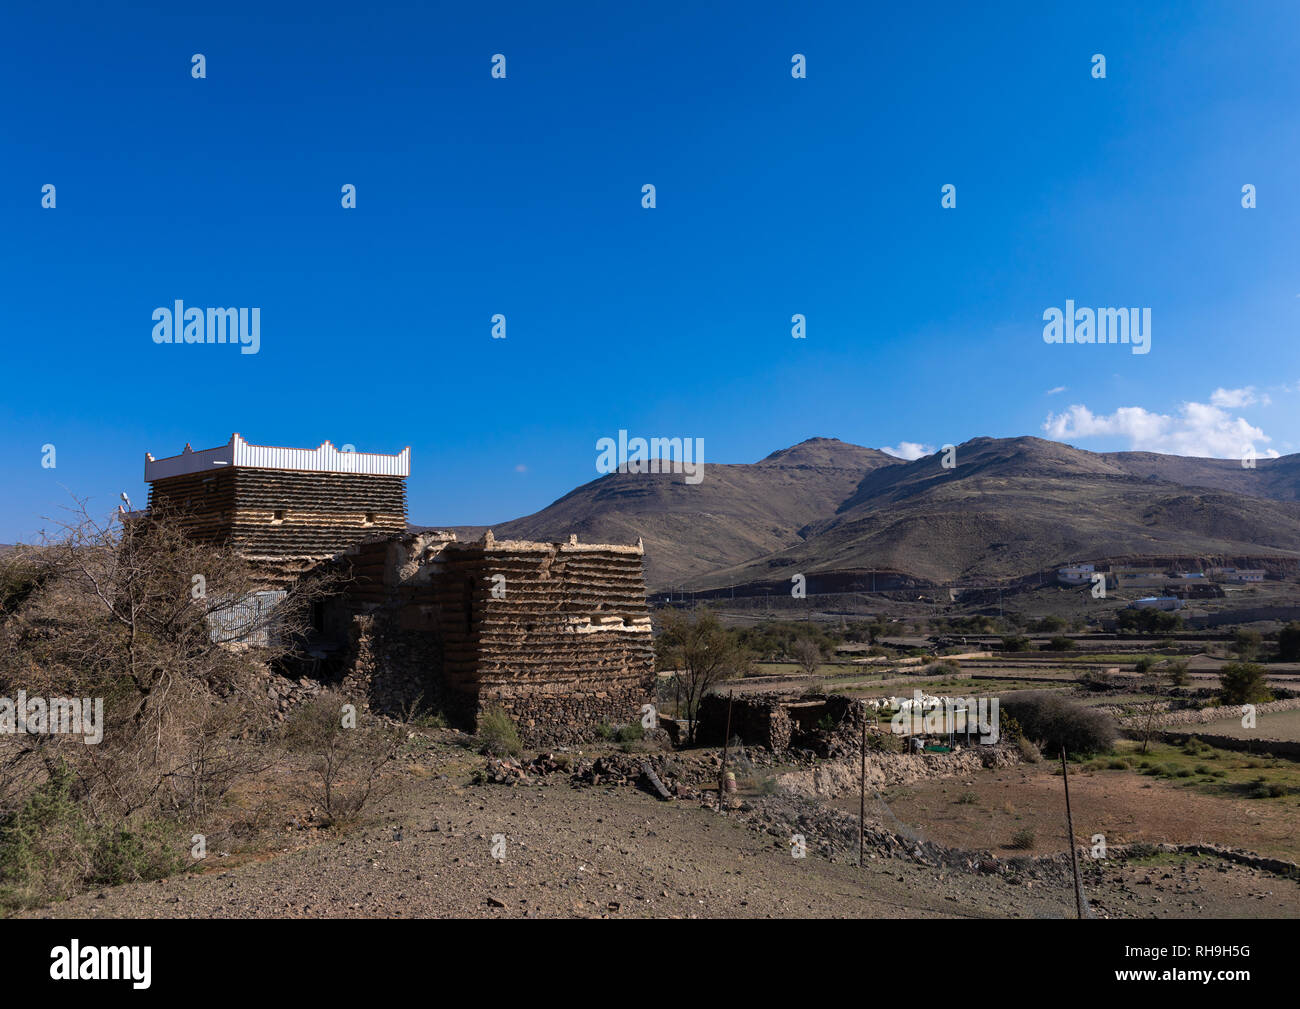 Stone and mud houses with slates, Asir province, Sarat Abidah, Saudi Arabia Stock Photo